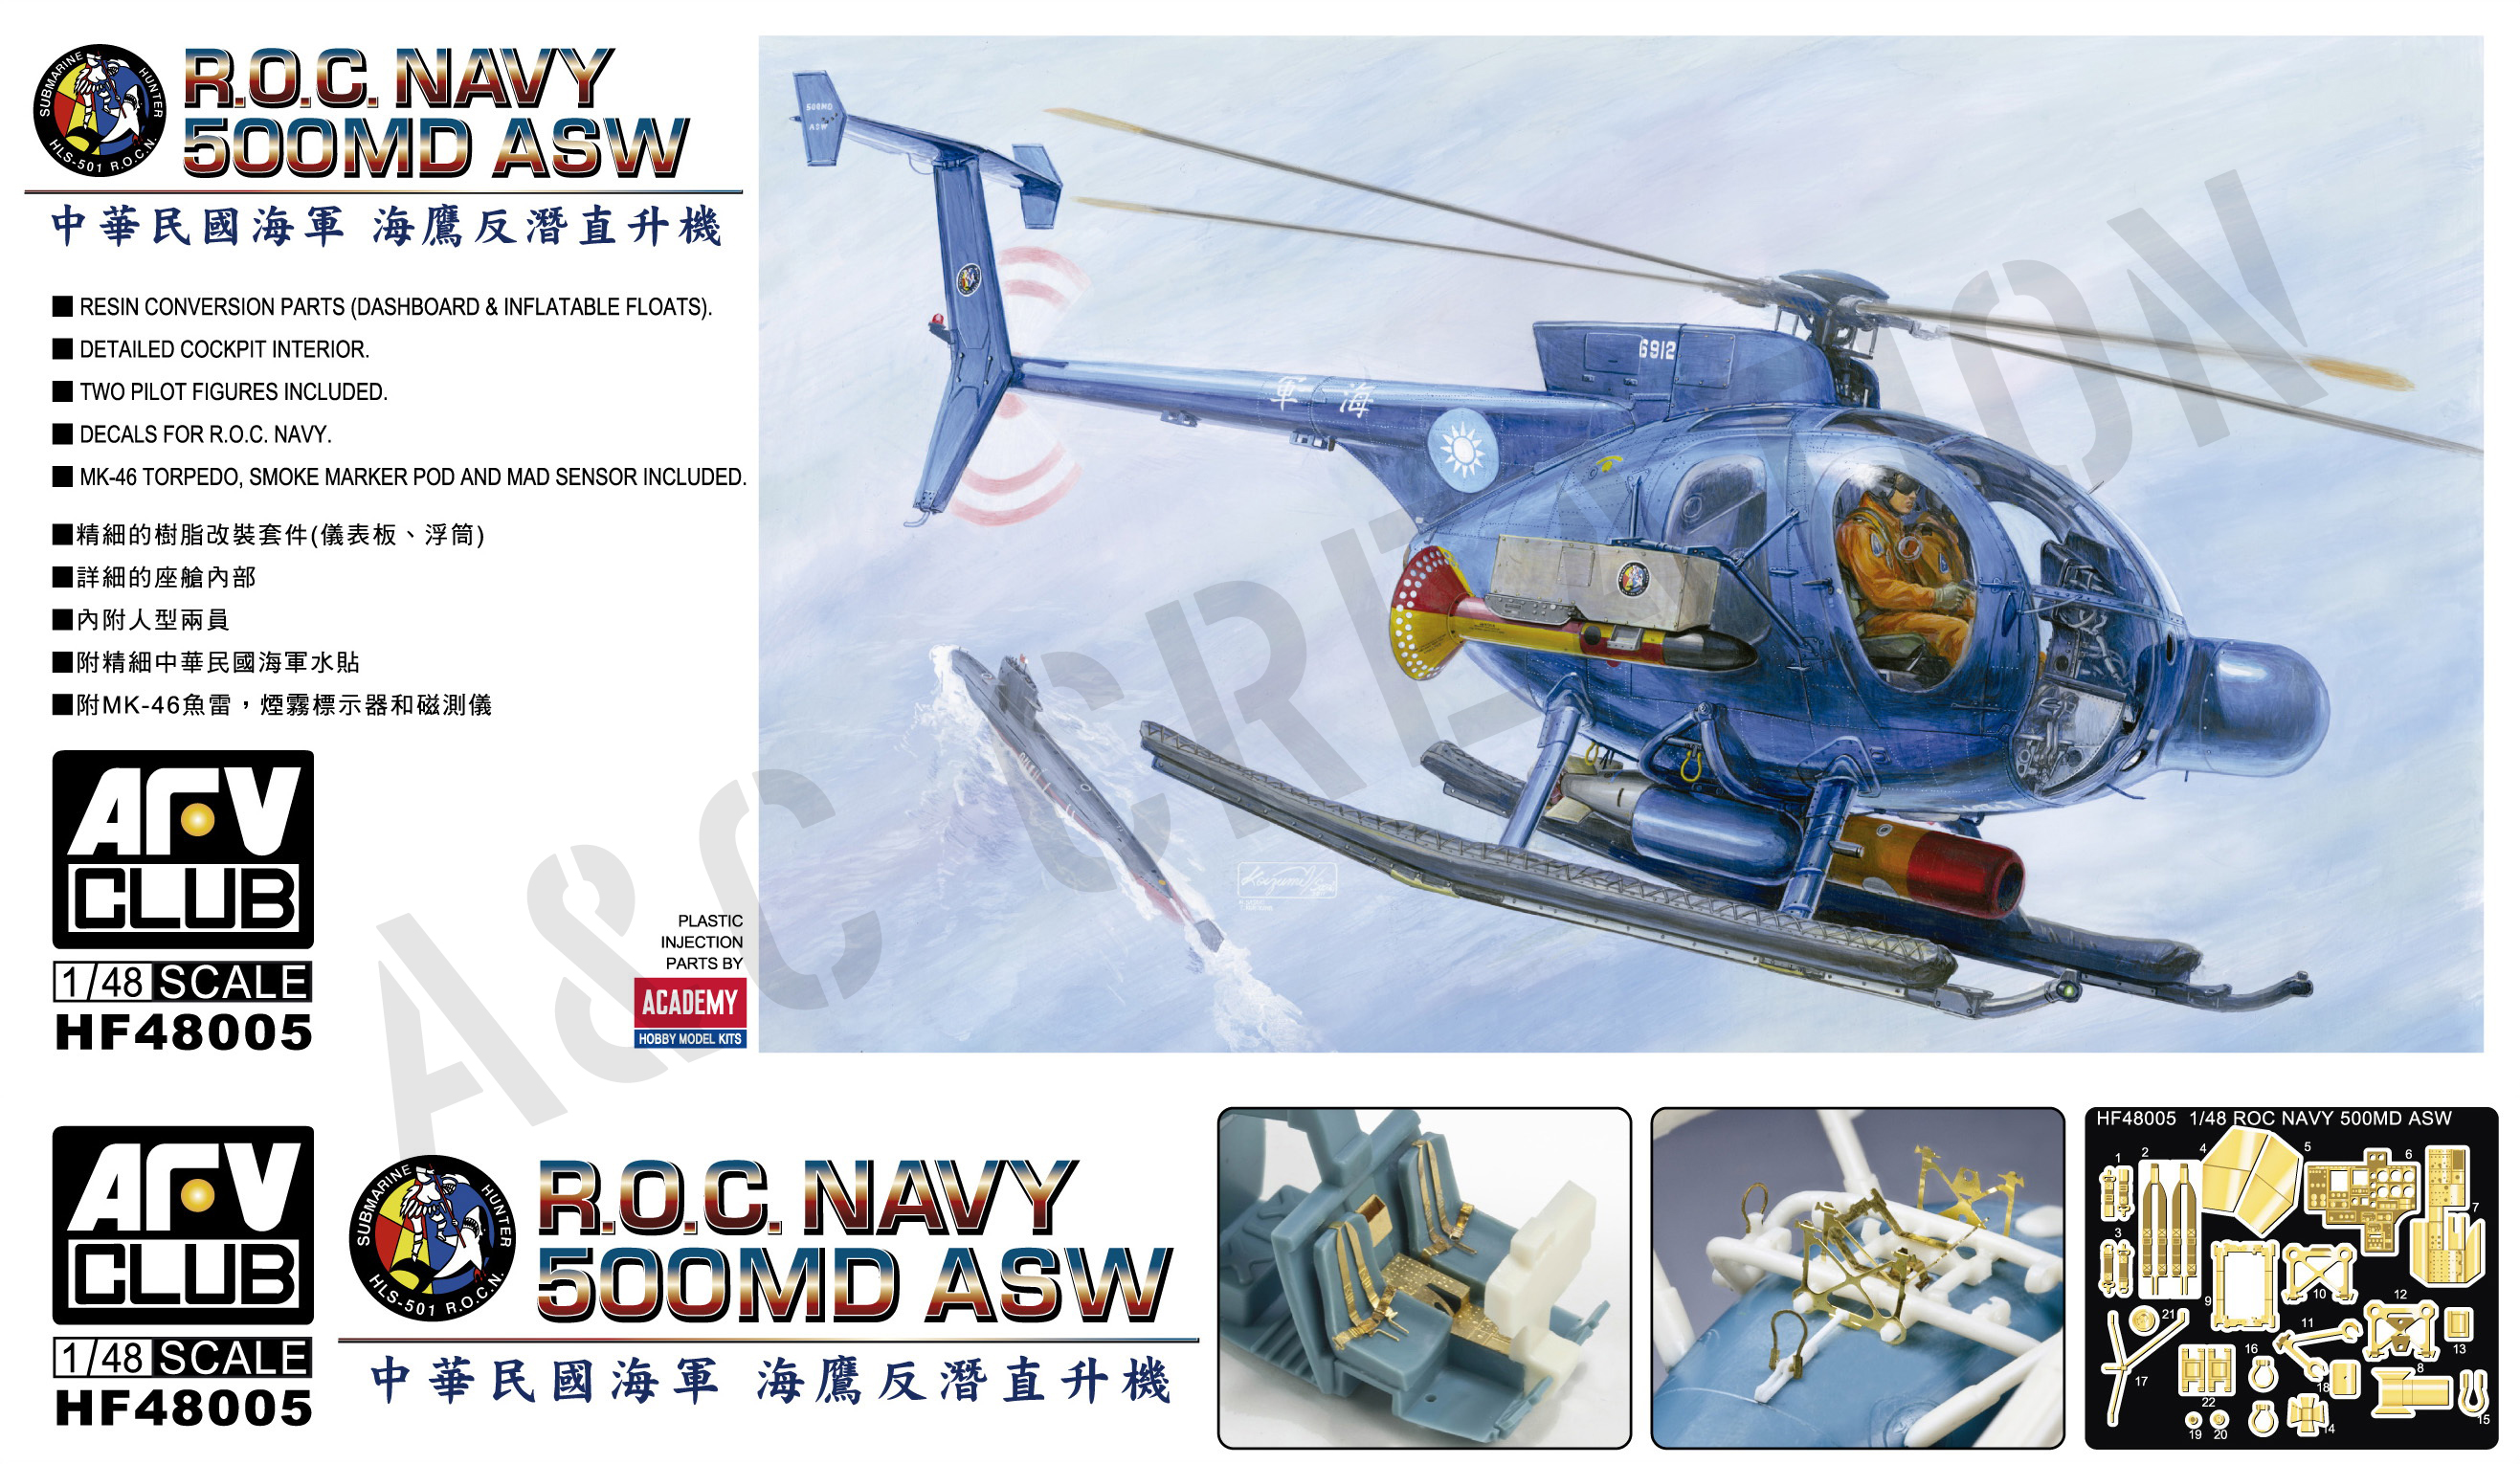 HF48005 R.O.C. Navy 500MD ASW